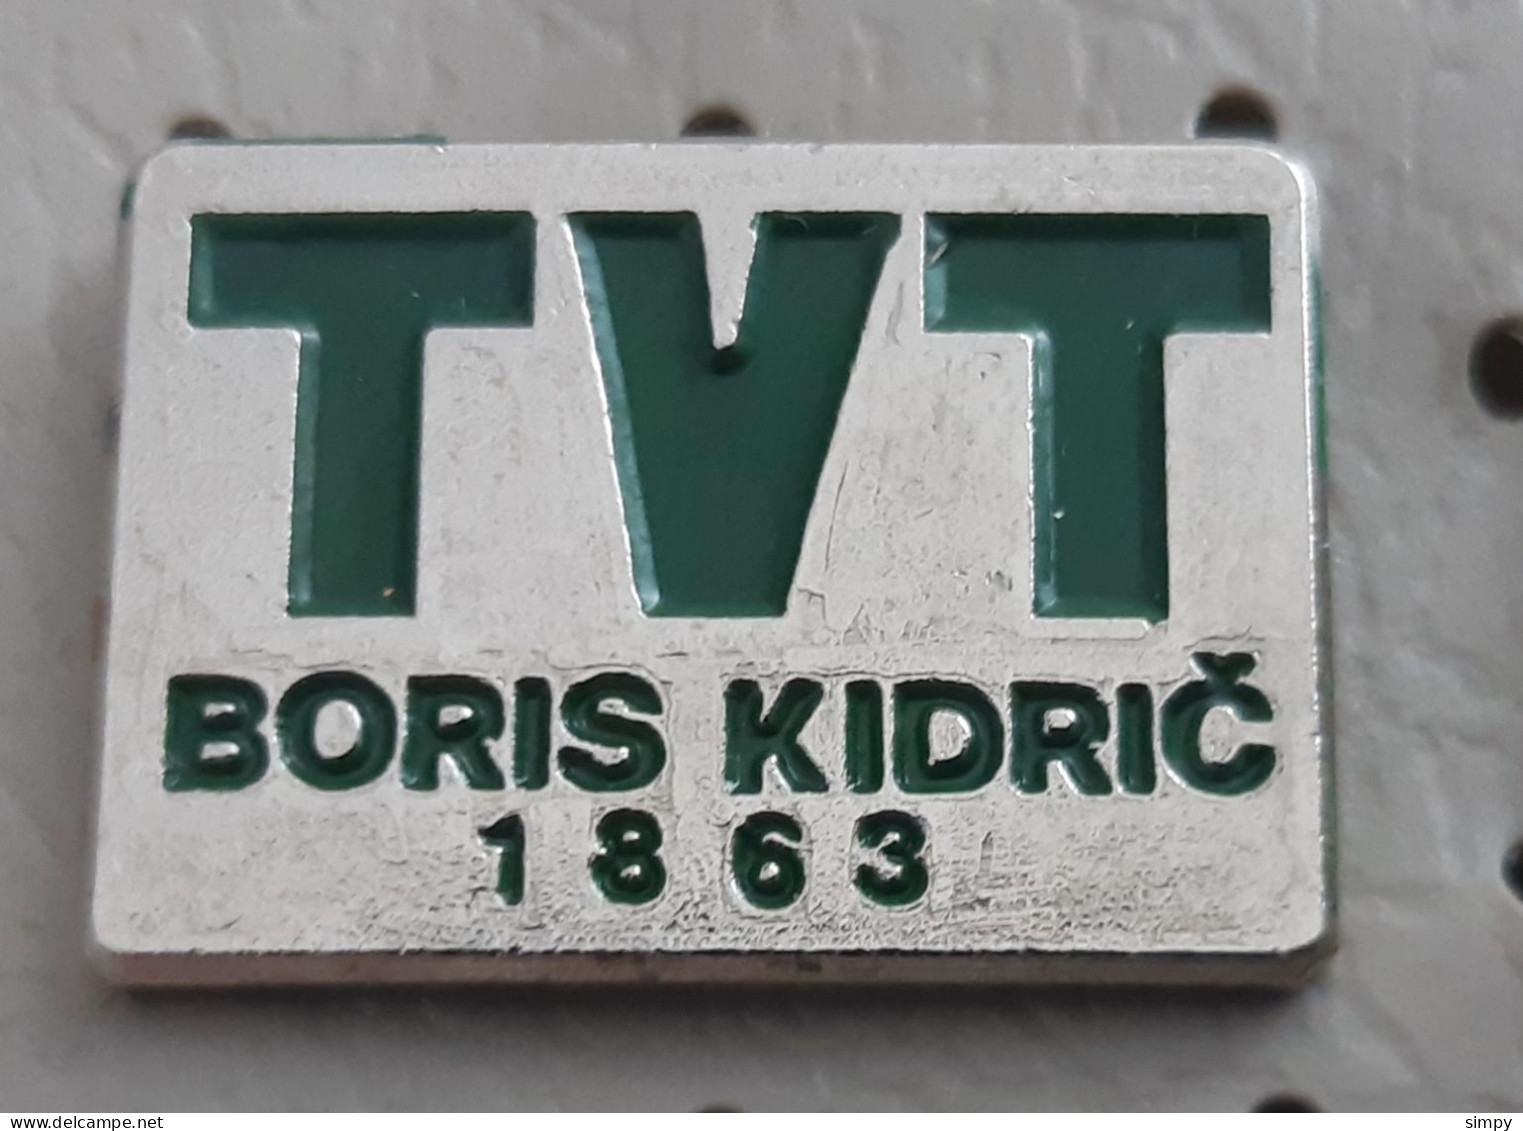 TVT Boris Kidric Maribor 1863 Locomotive Train Industry Slovenia Ex Yugoslavia Pin - Transport Und Verkehr